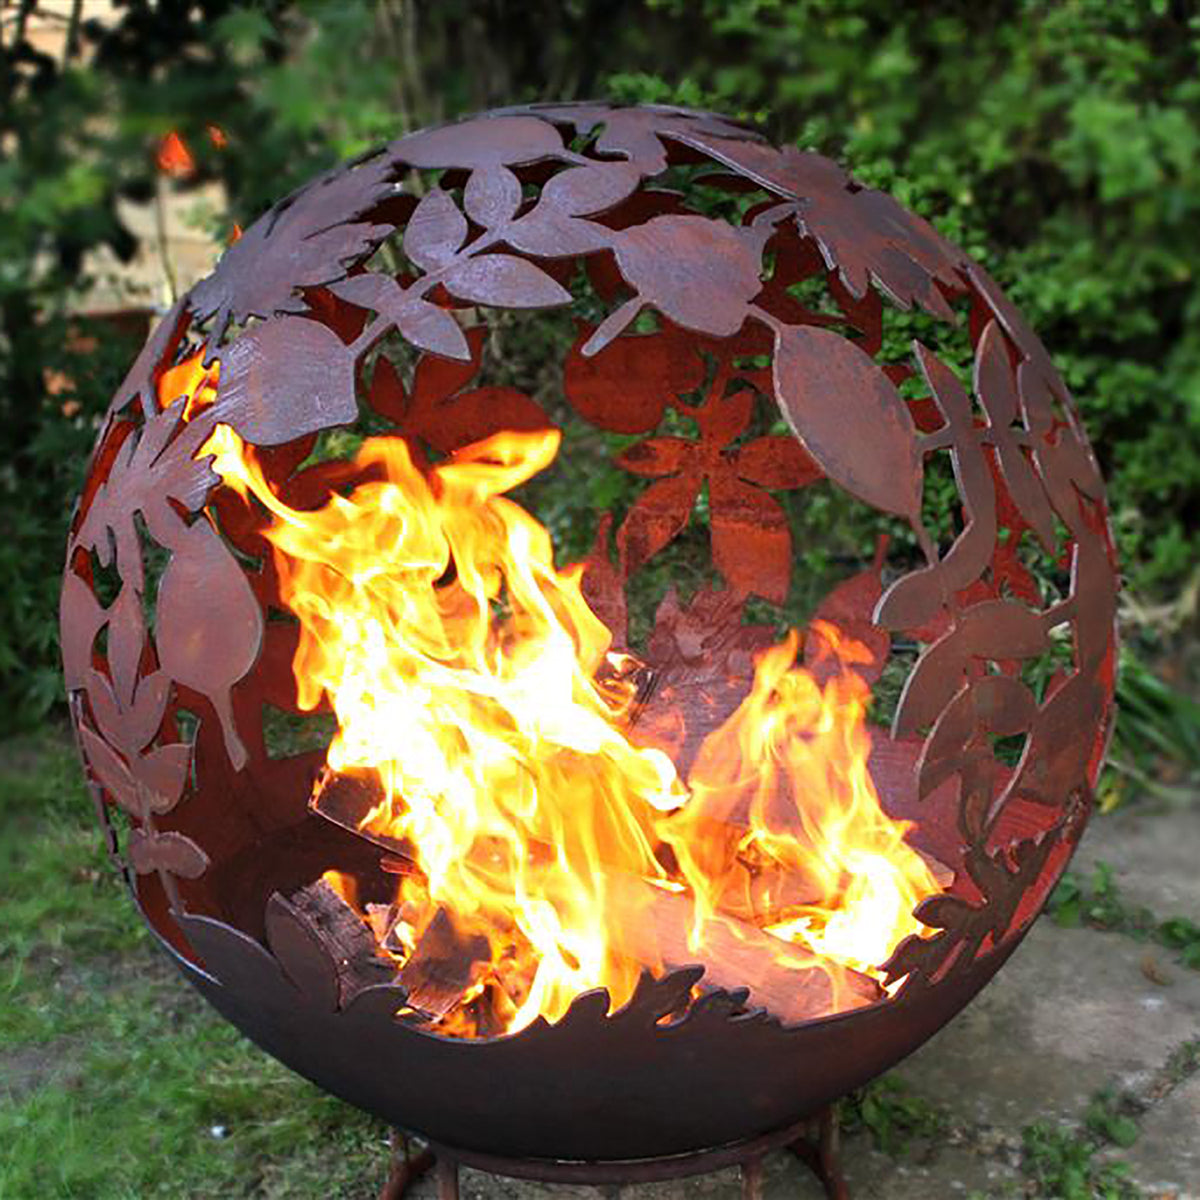 Garden Fire Ball 70cm Leaf Design with Black Finish